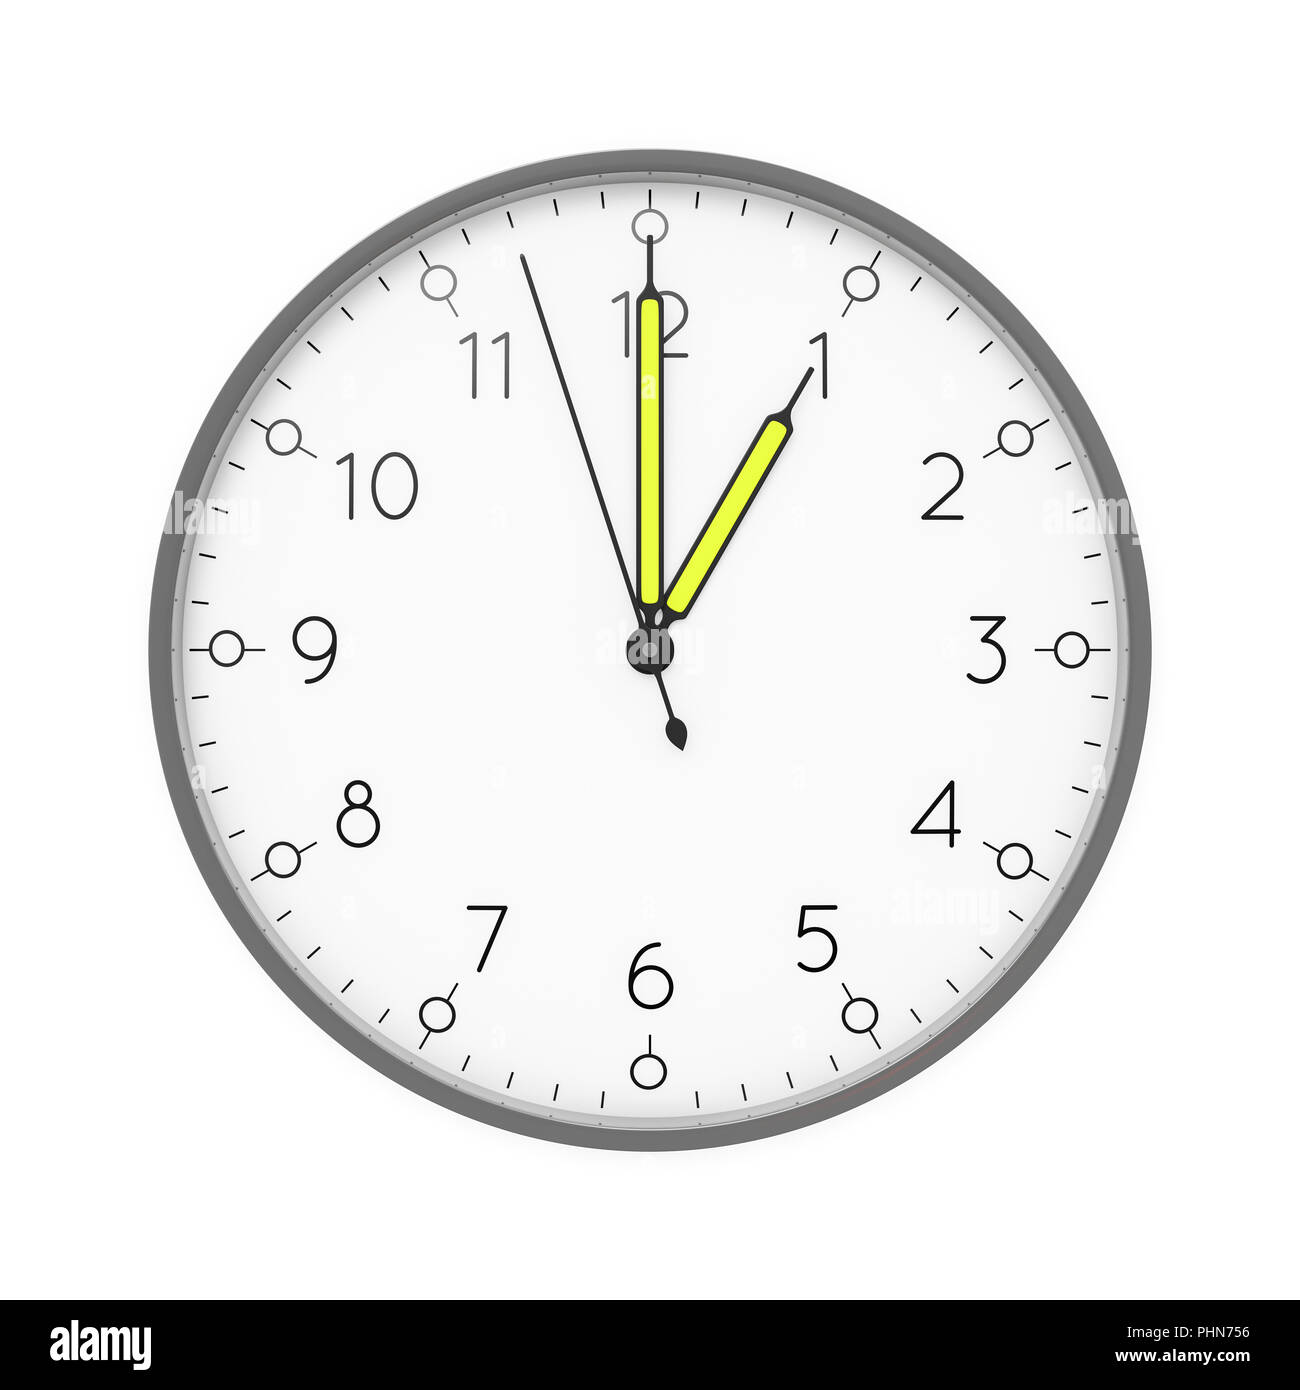 Часы показывают 1 час